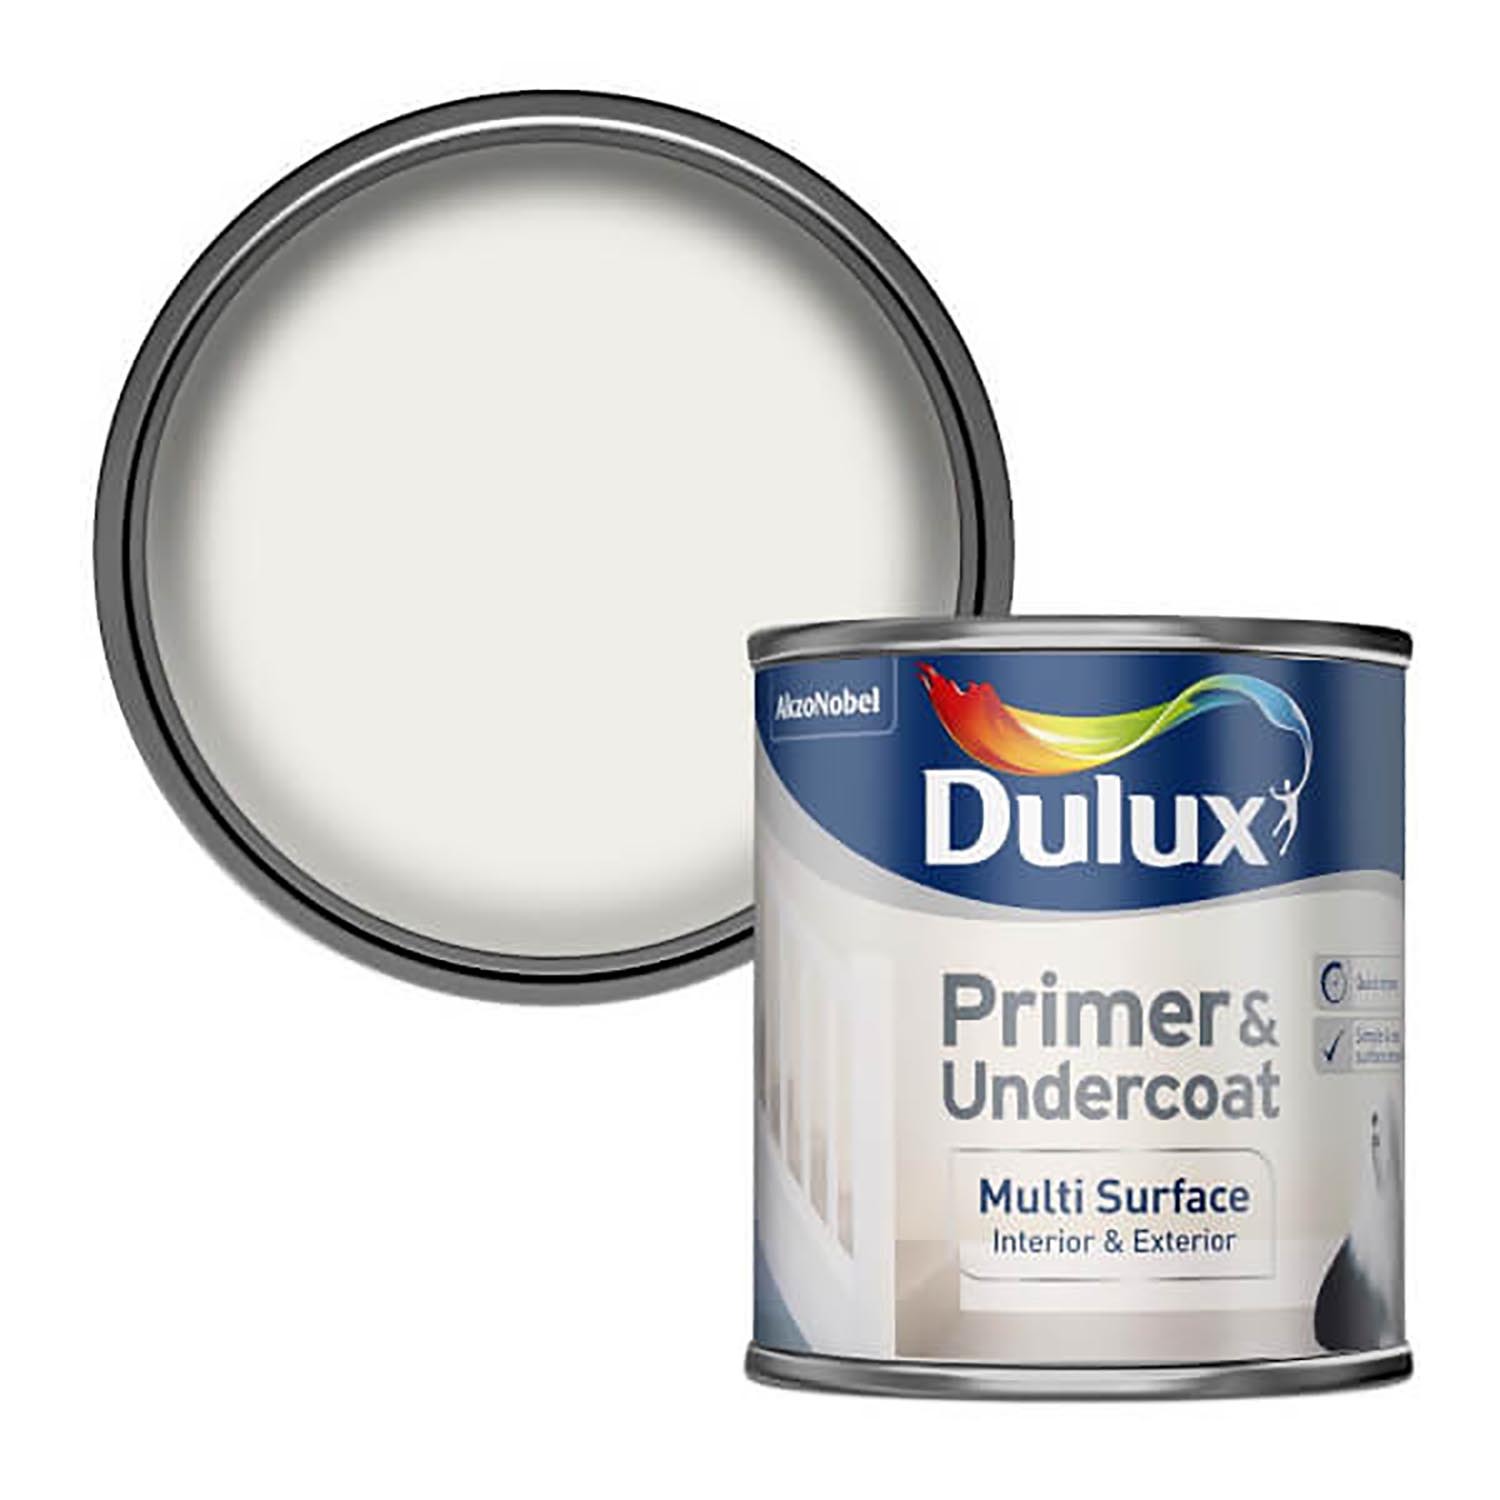 Dulux Primer and Undercoat 250ml Image 1